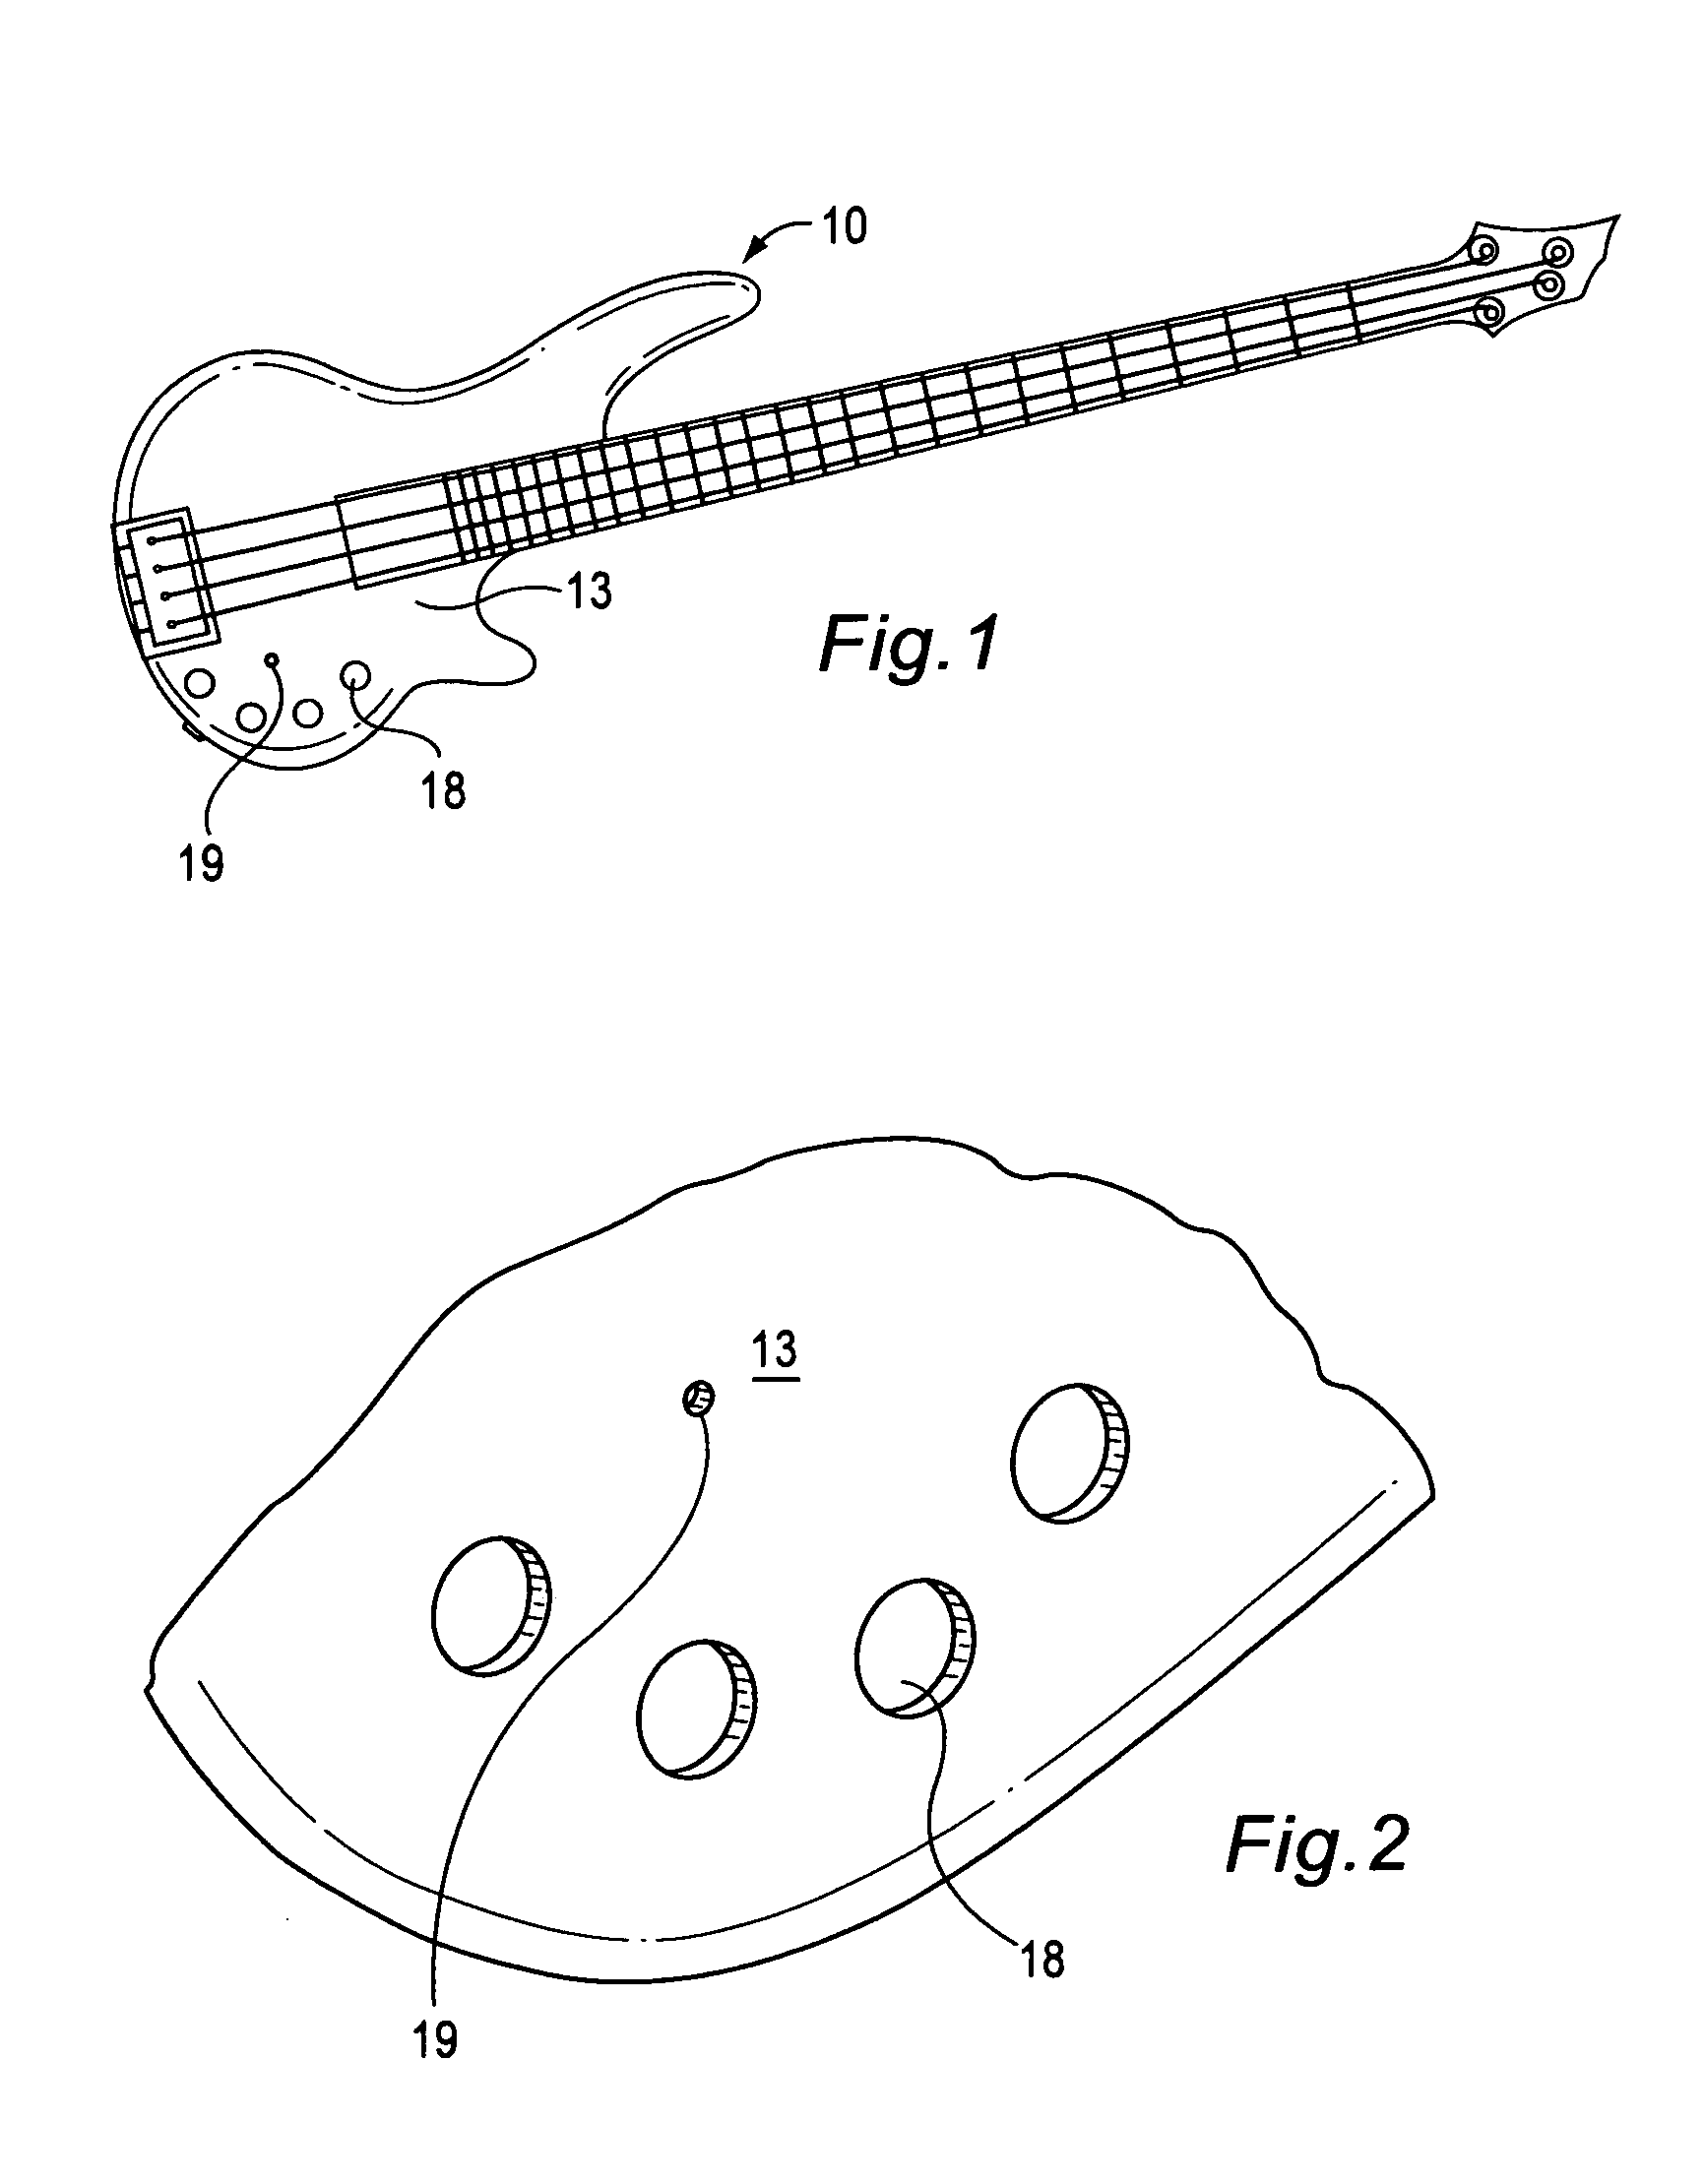 Interchangable pre amp module for an electronic string instrument